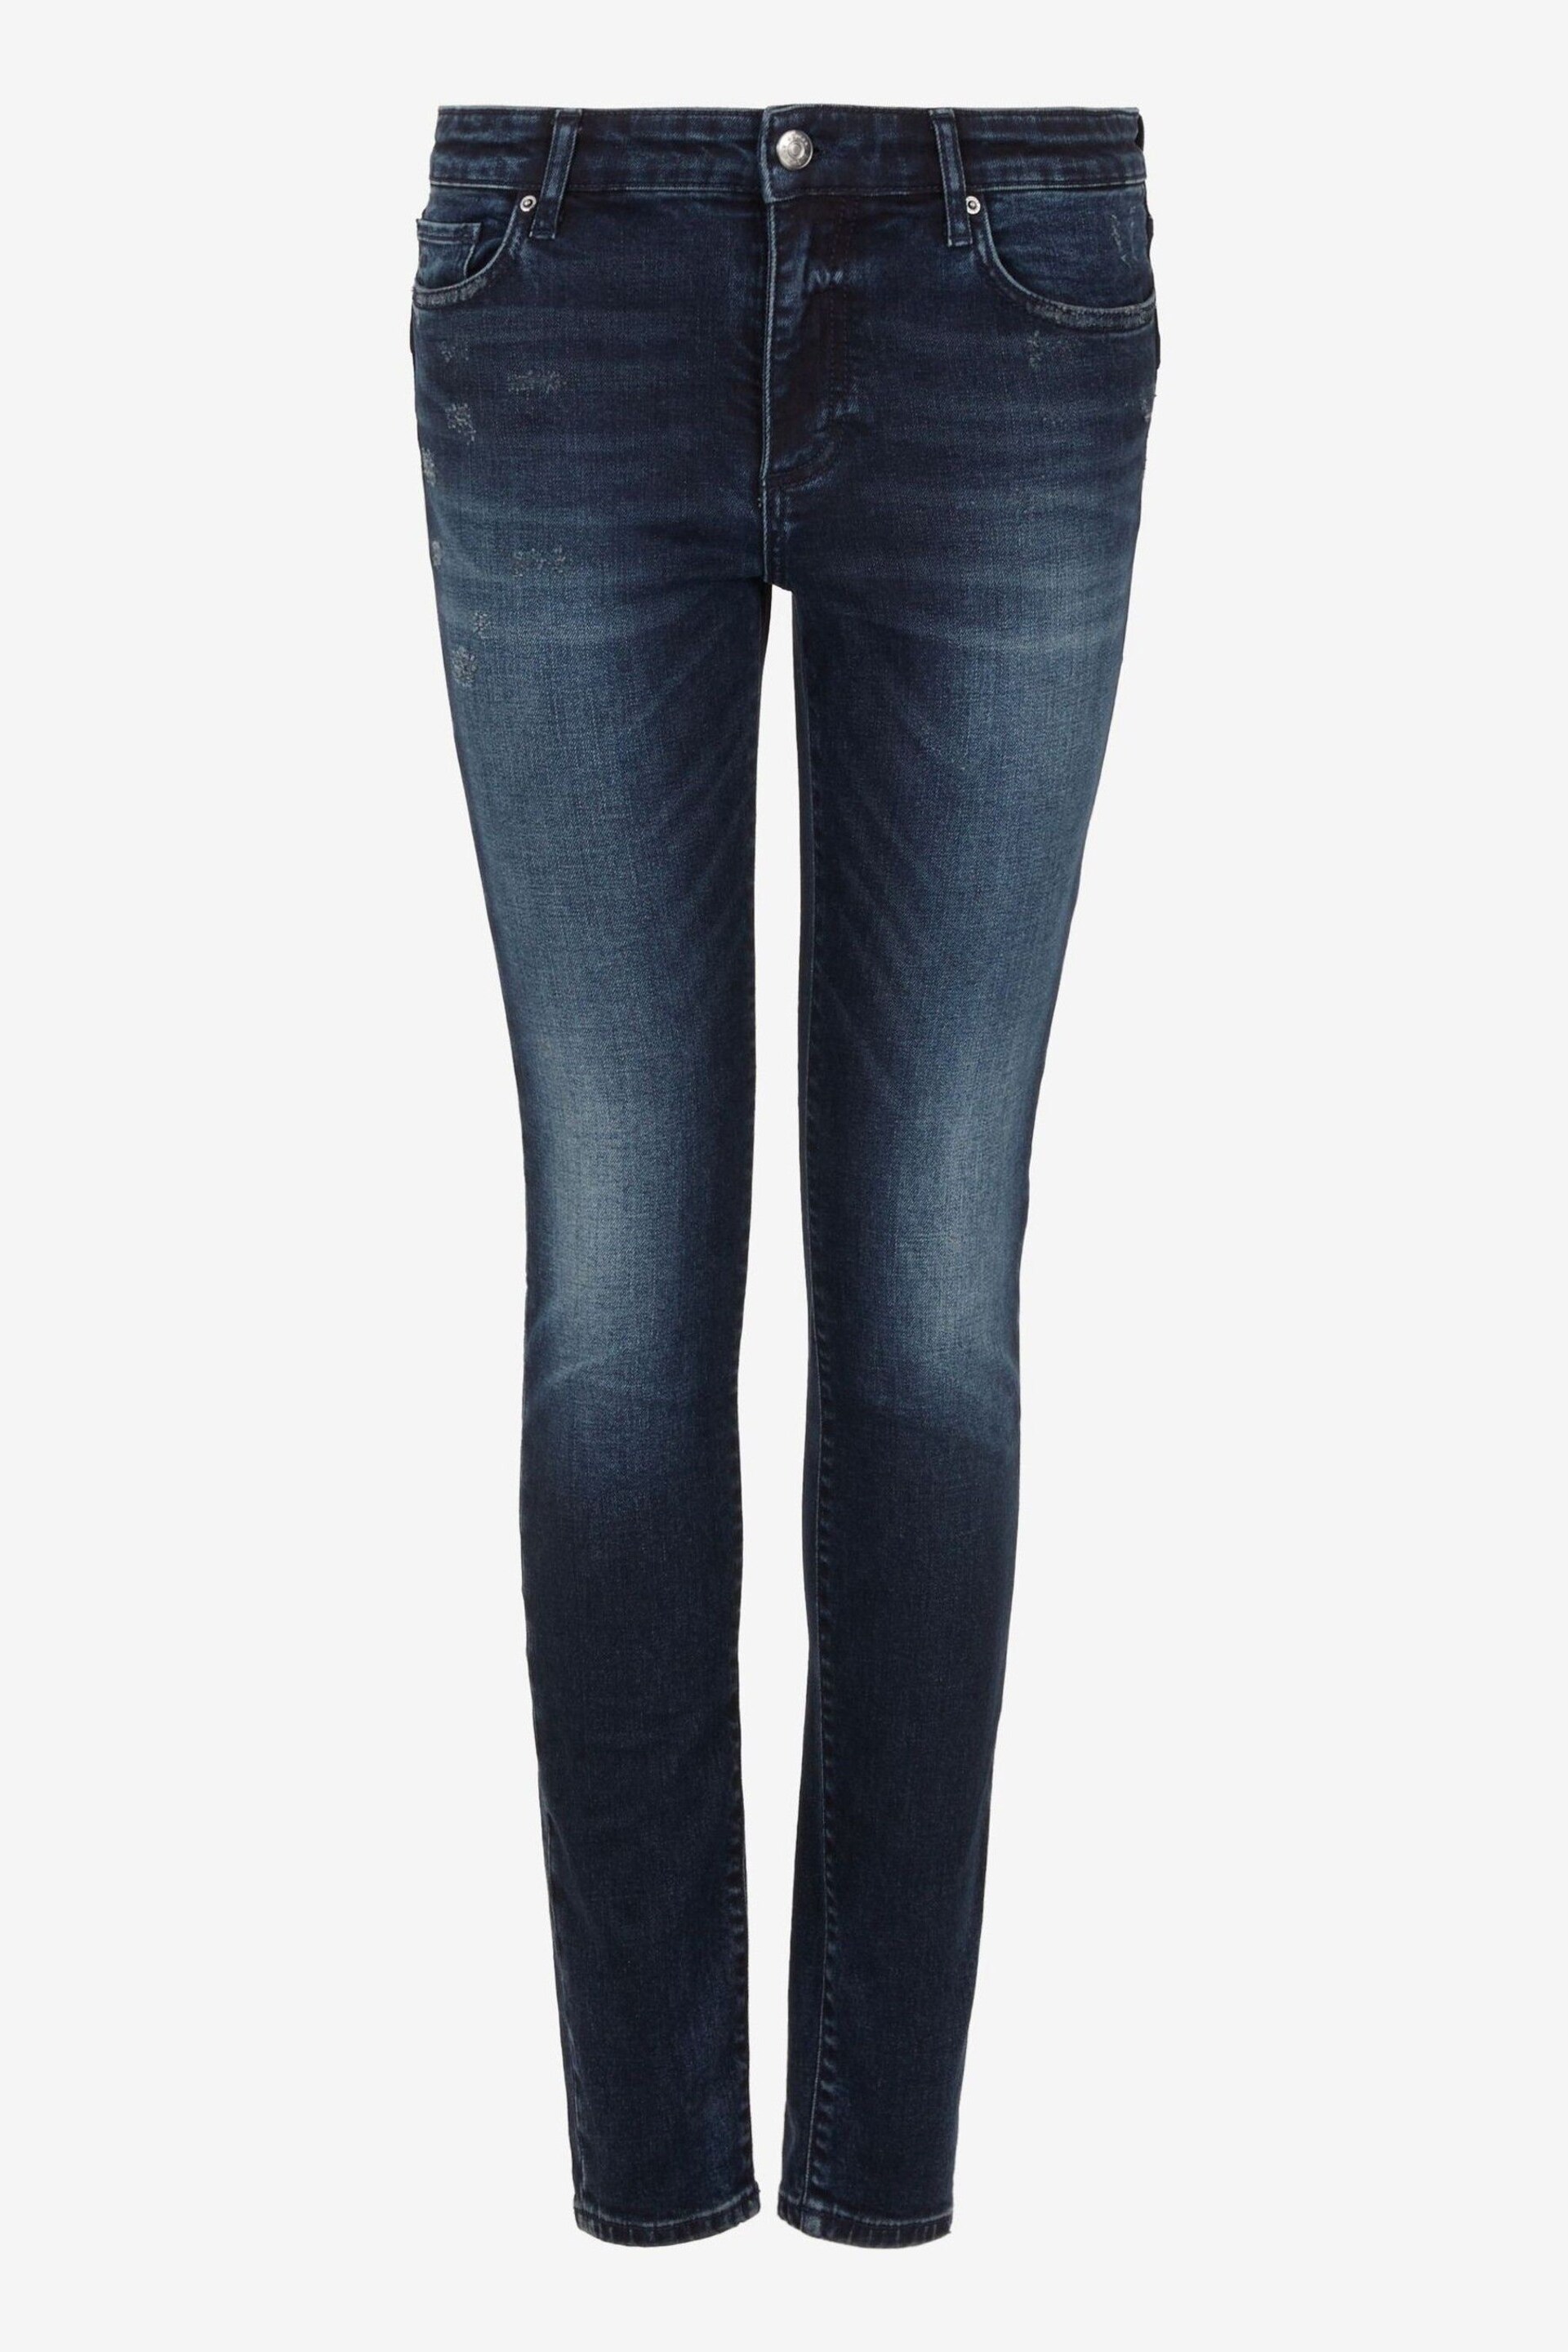 Armani Exchange Denim Dark Wash J69 Skinny Fit Jeans - Image 3 of 5